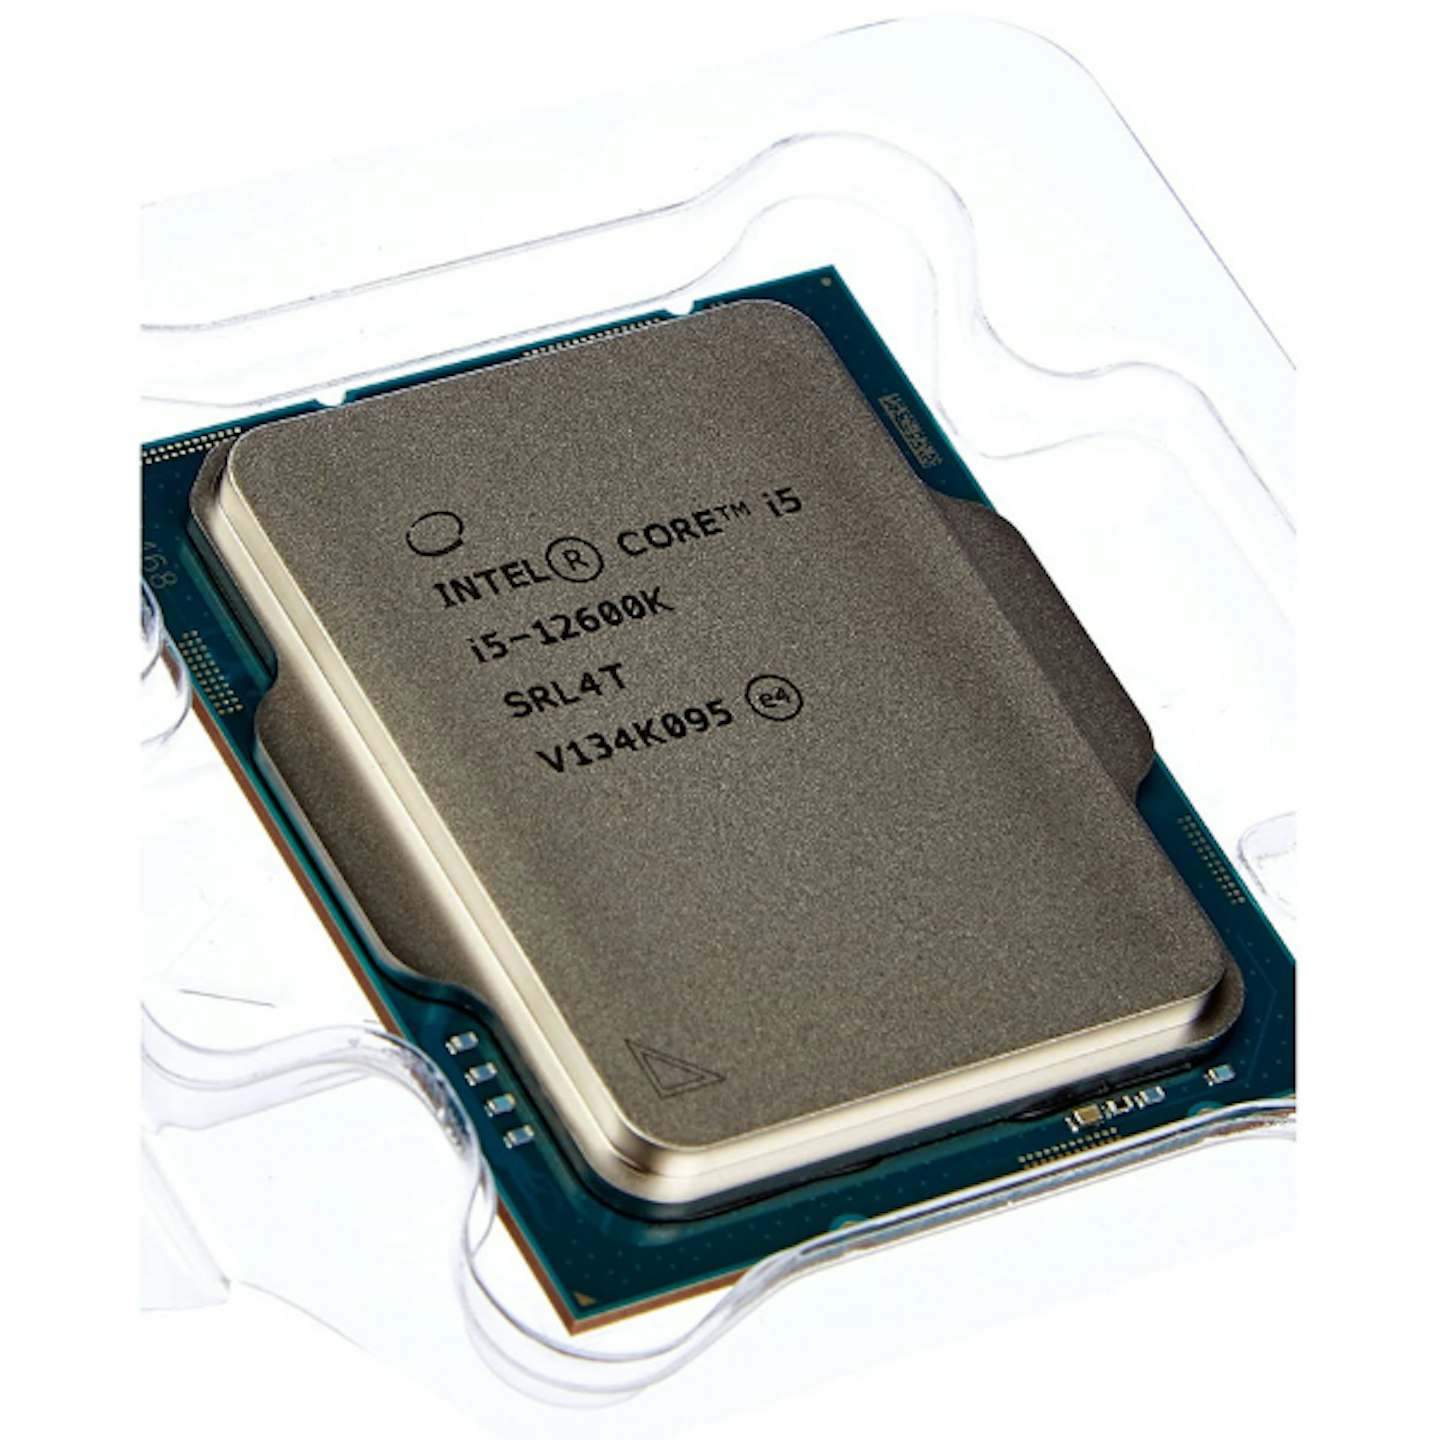 Intel Core i5-12600K 